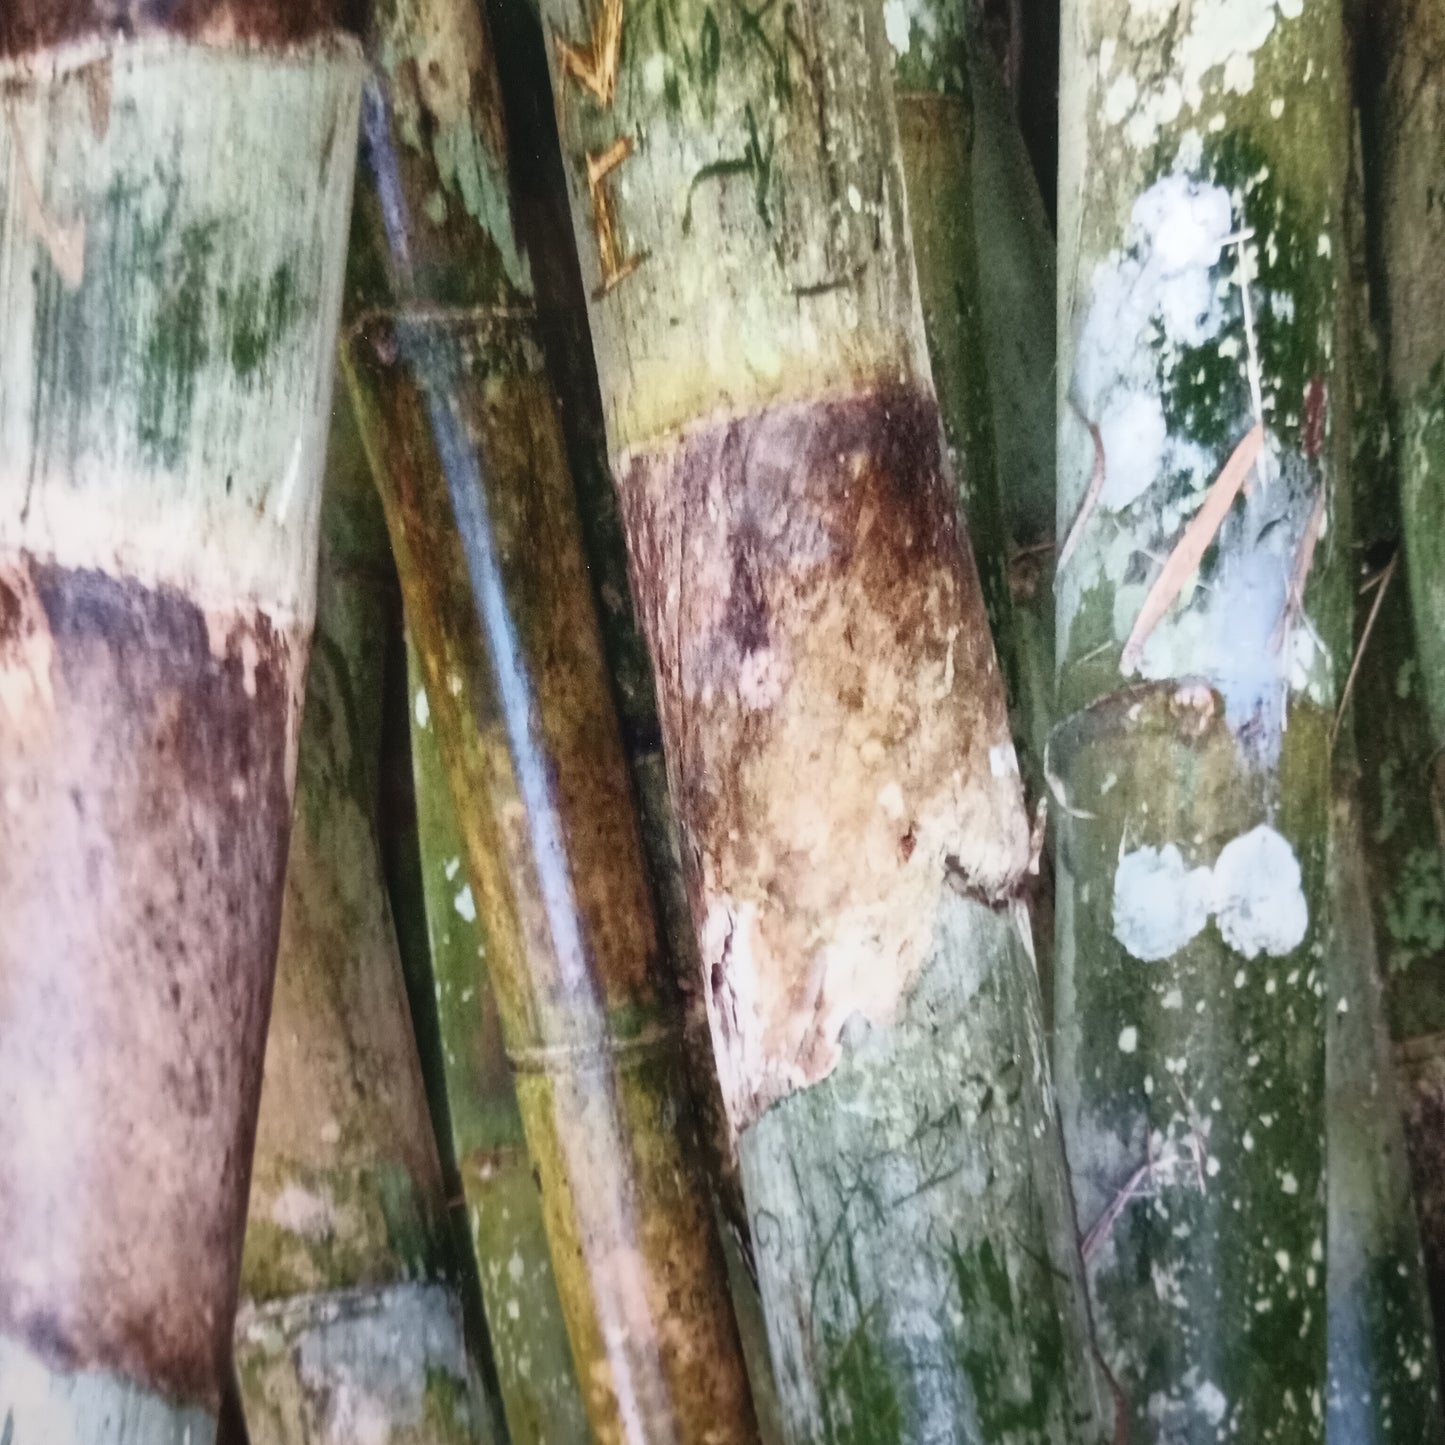 Bamboo Stalks in Panama Original Photo Print 8 x 10